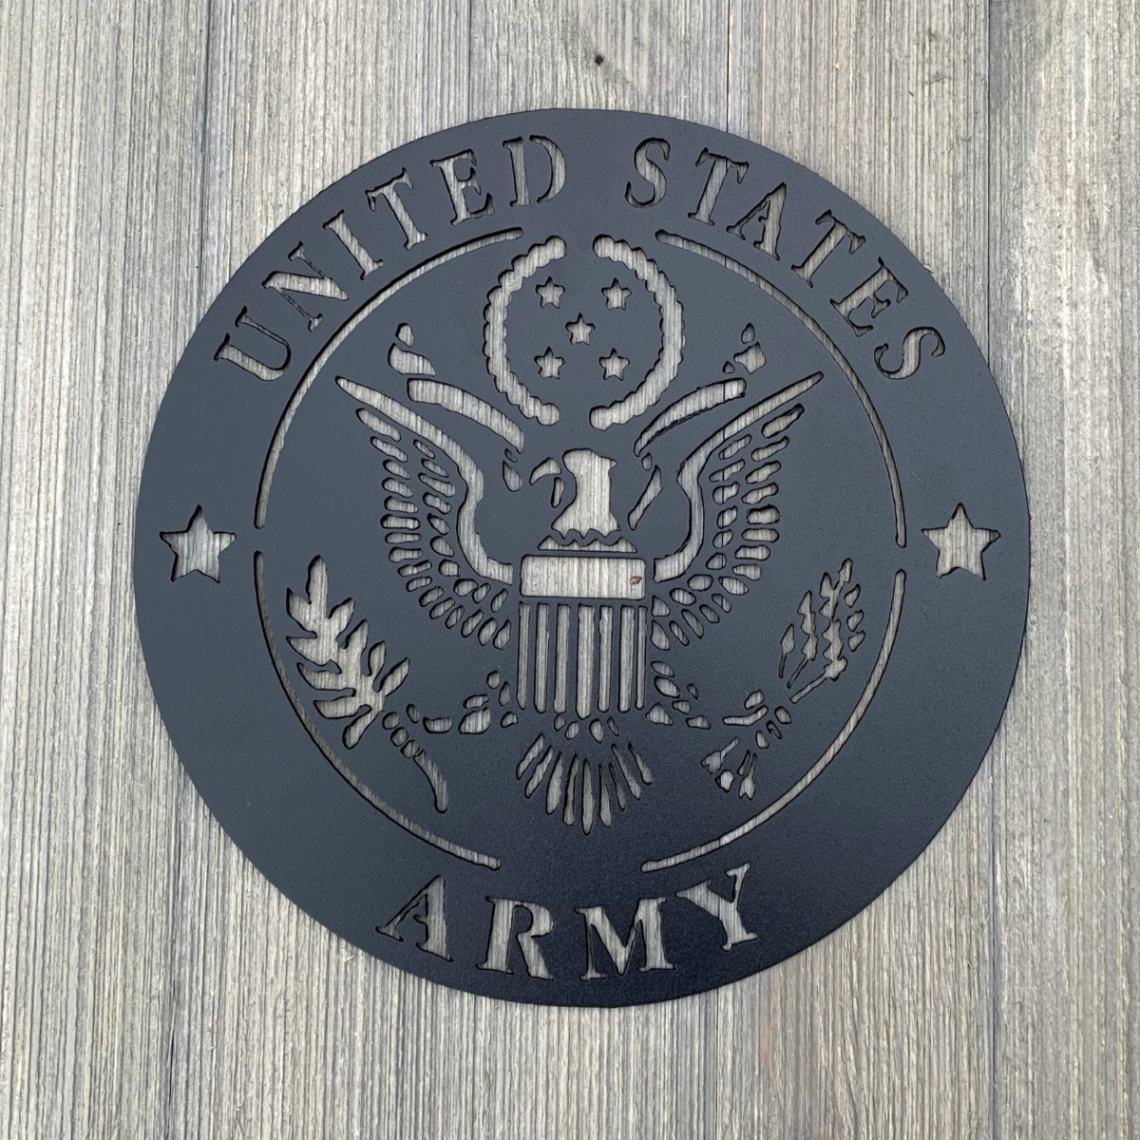 United States Army Metal Sign Cutout, Cut Metal Sign, Wall Metal Art